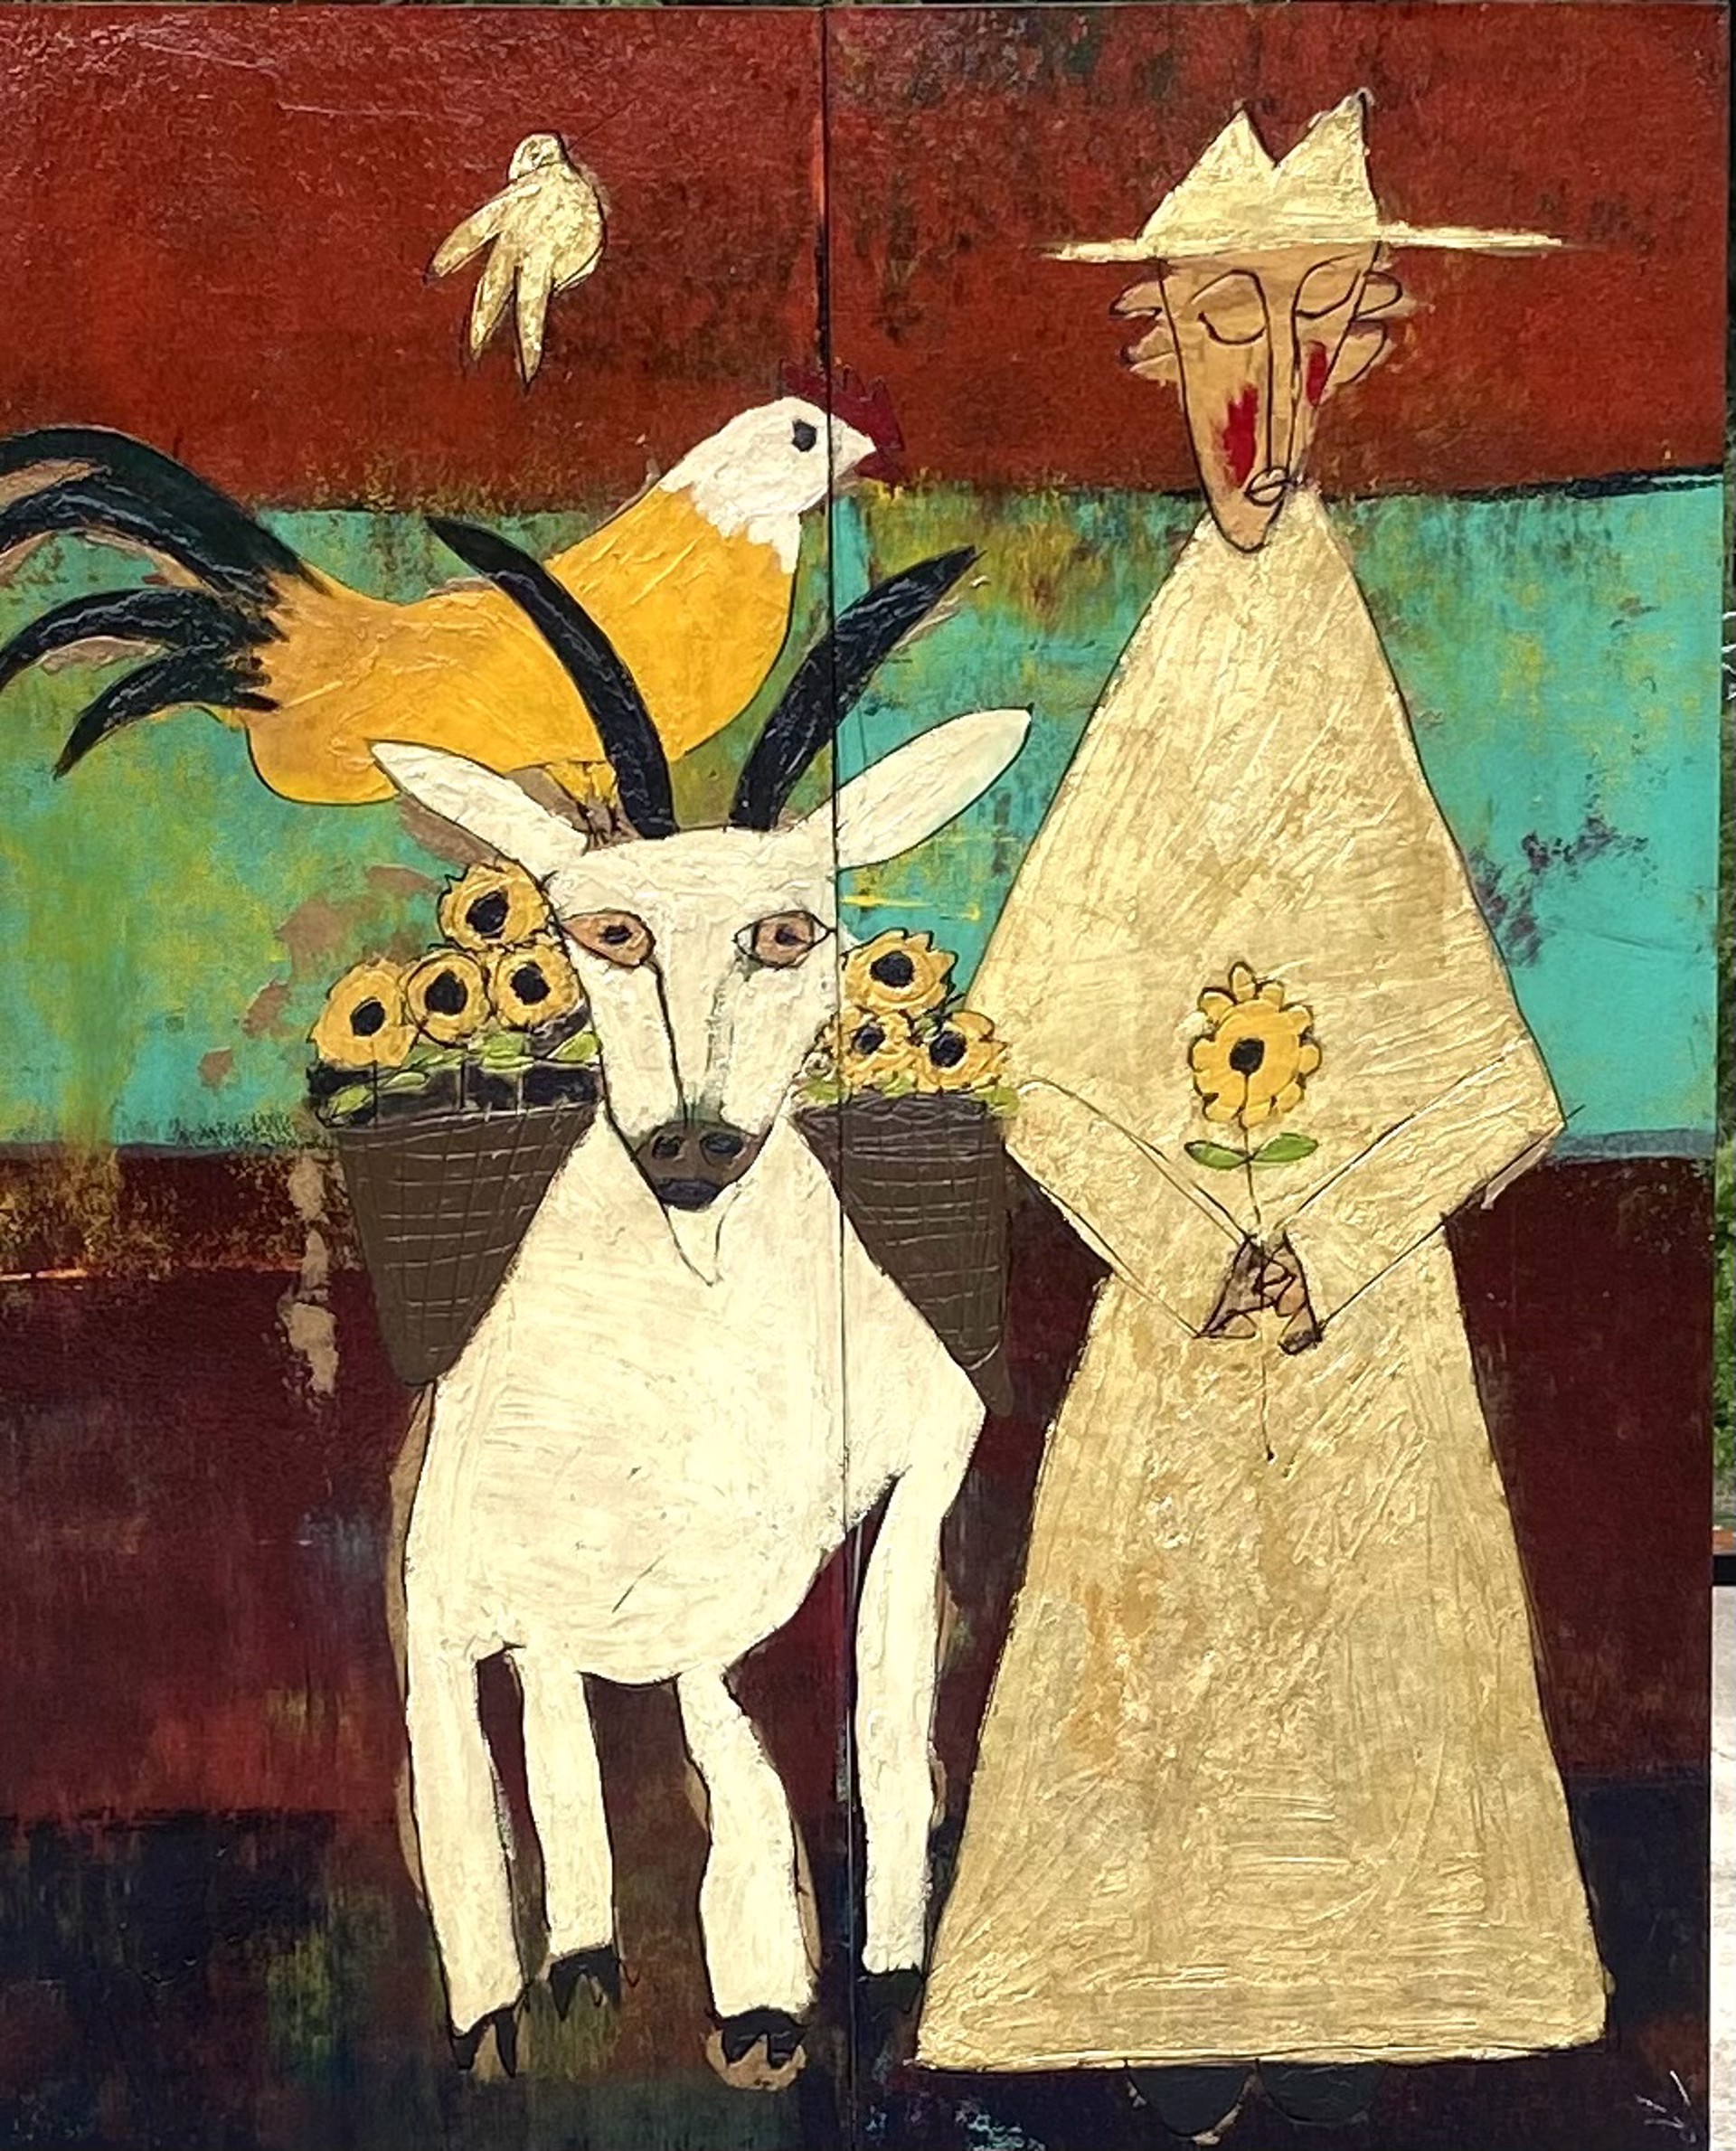 Goatfeathers by Trés Taylor